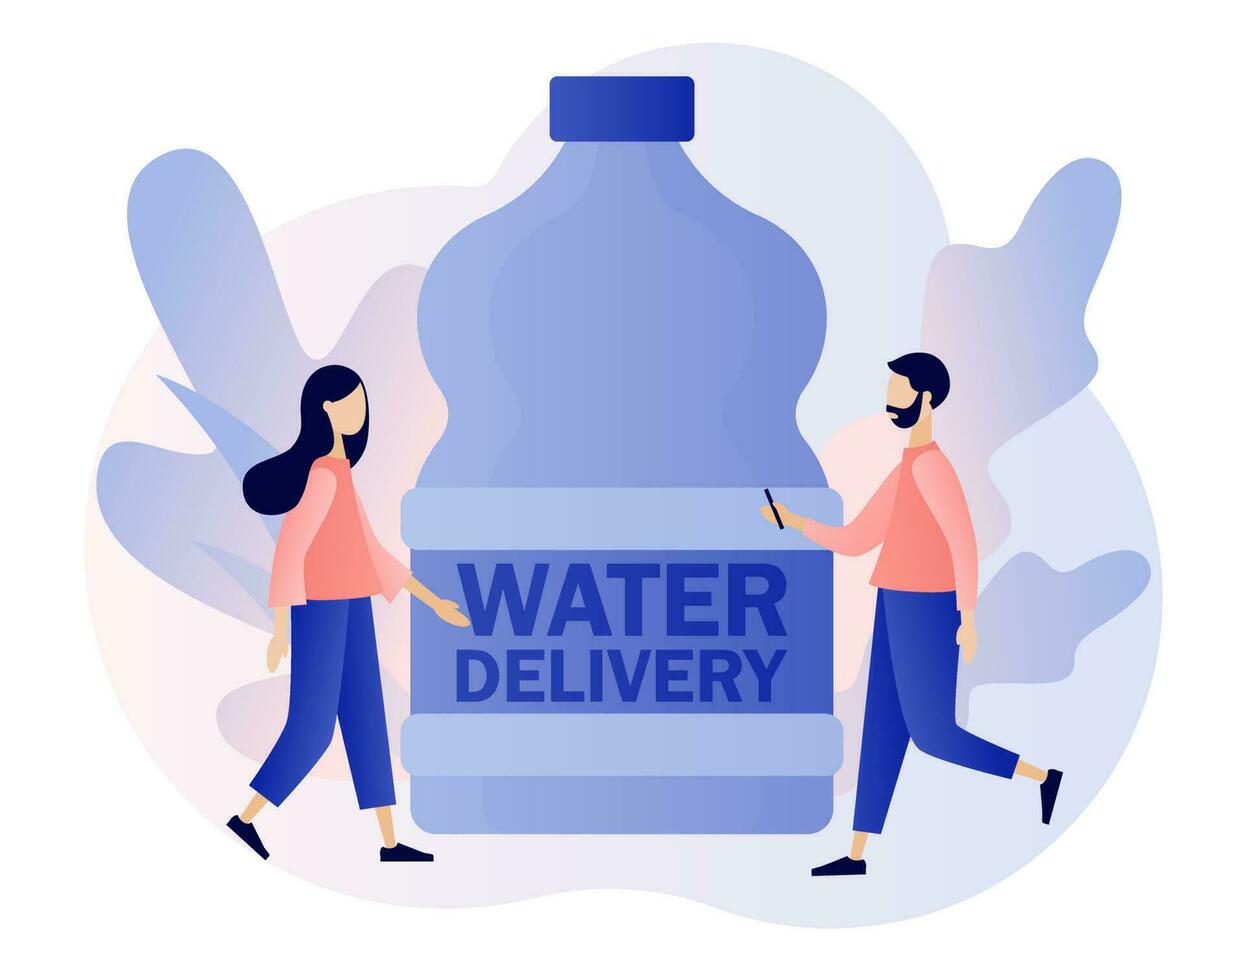 agua entrega servicio. grande botella con limpiar agua. suministrar, envío. moderno plano dibujos animados estilo. vector ilustración en blanco antecedentes